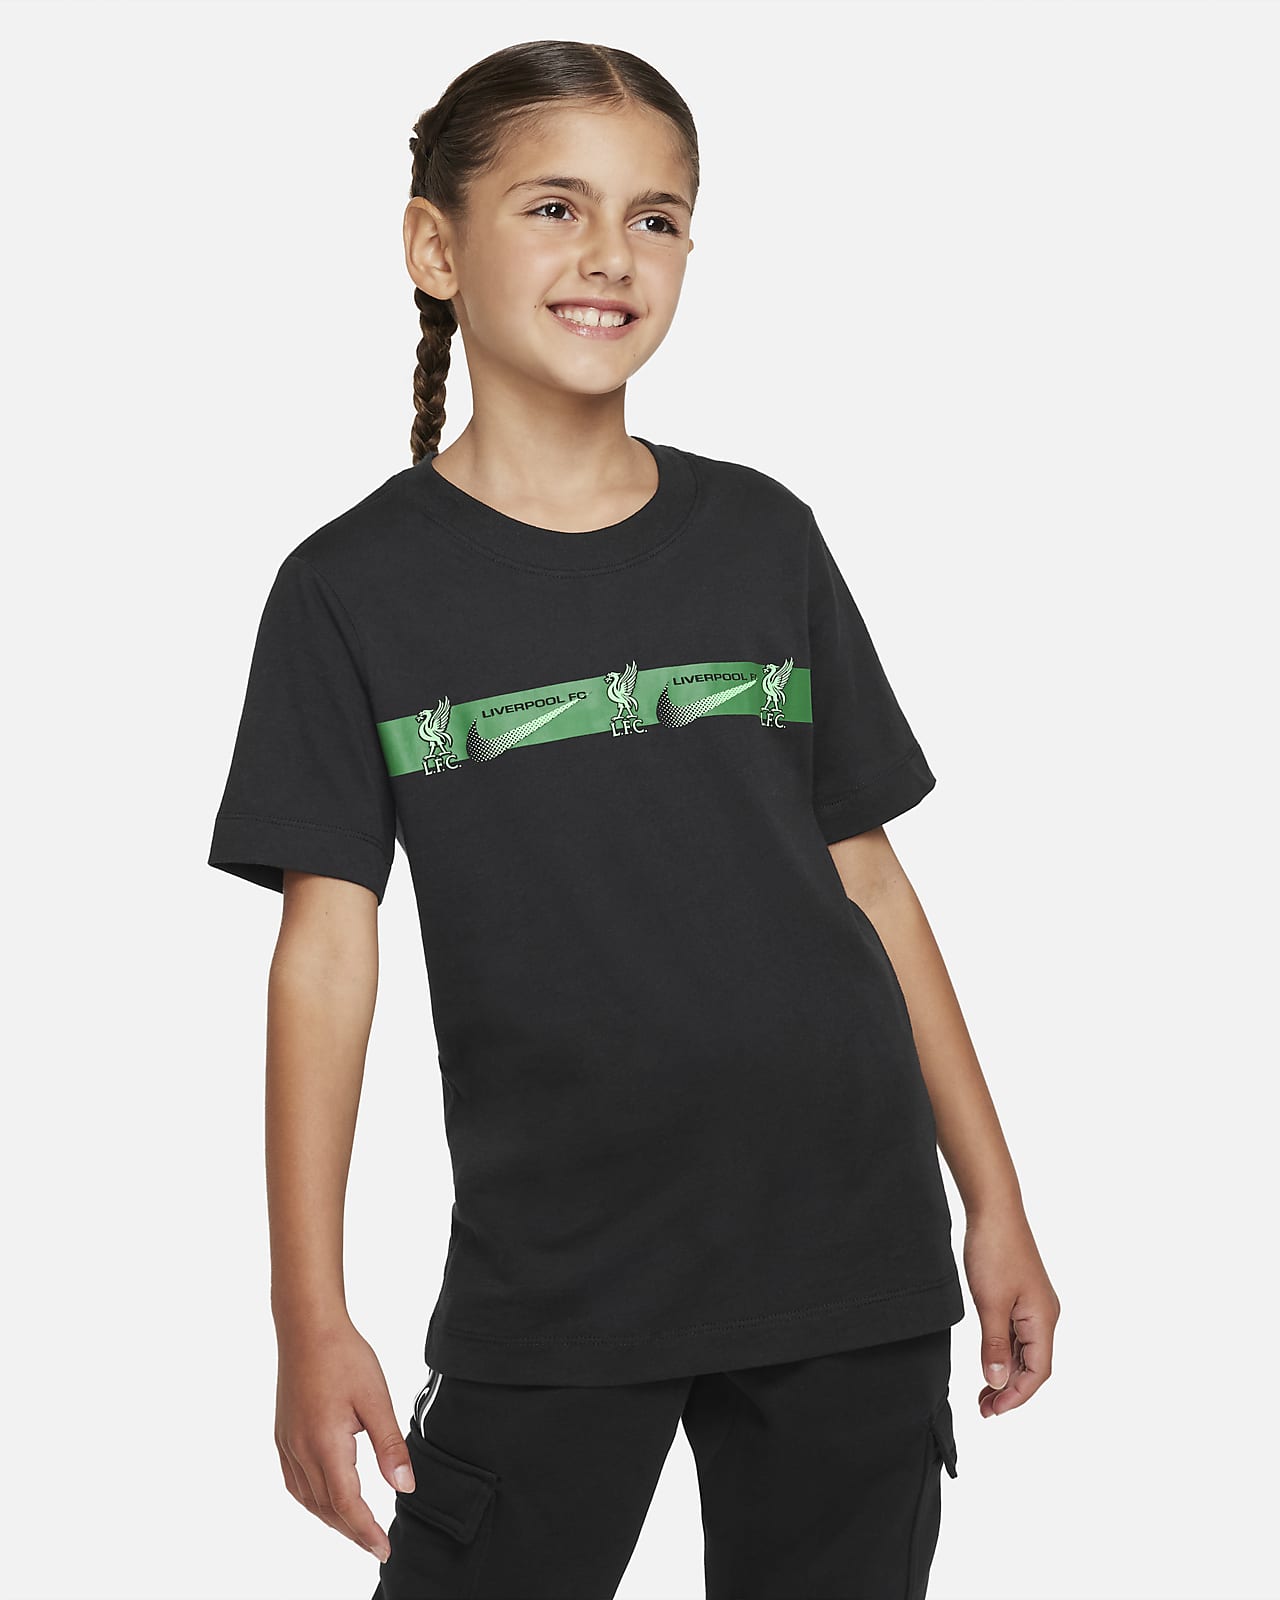 Liverpool FC Nike Fußball-T-Shirt für ältere Kinder